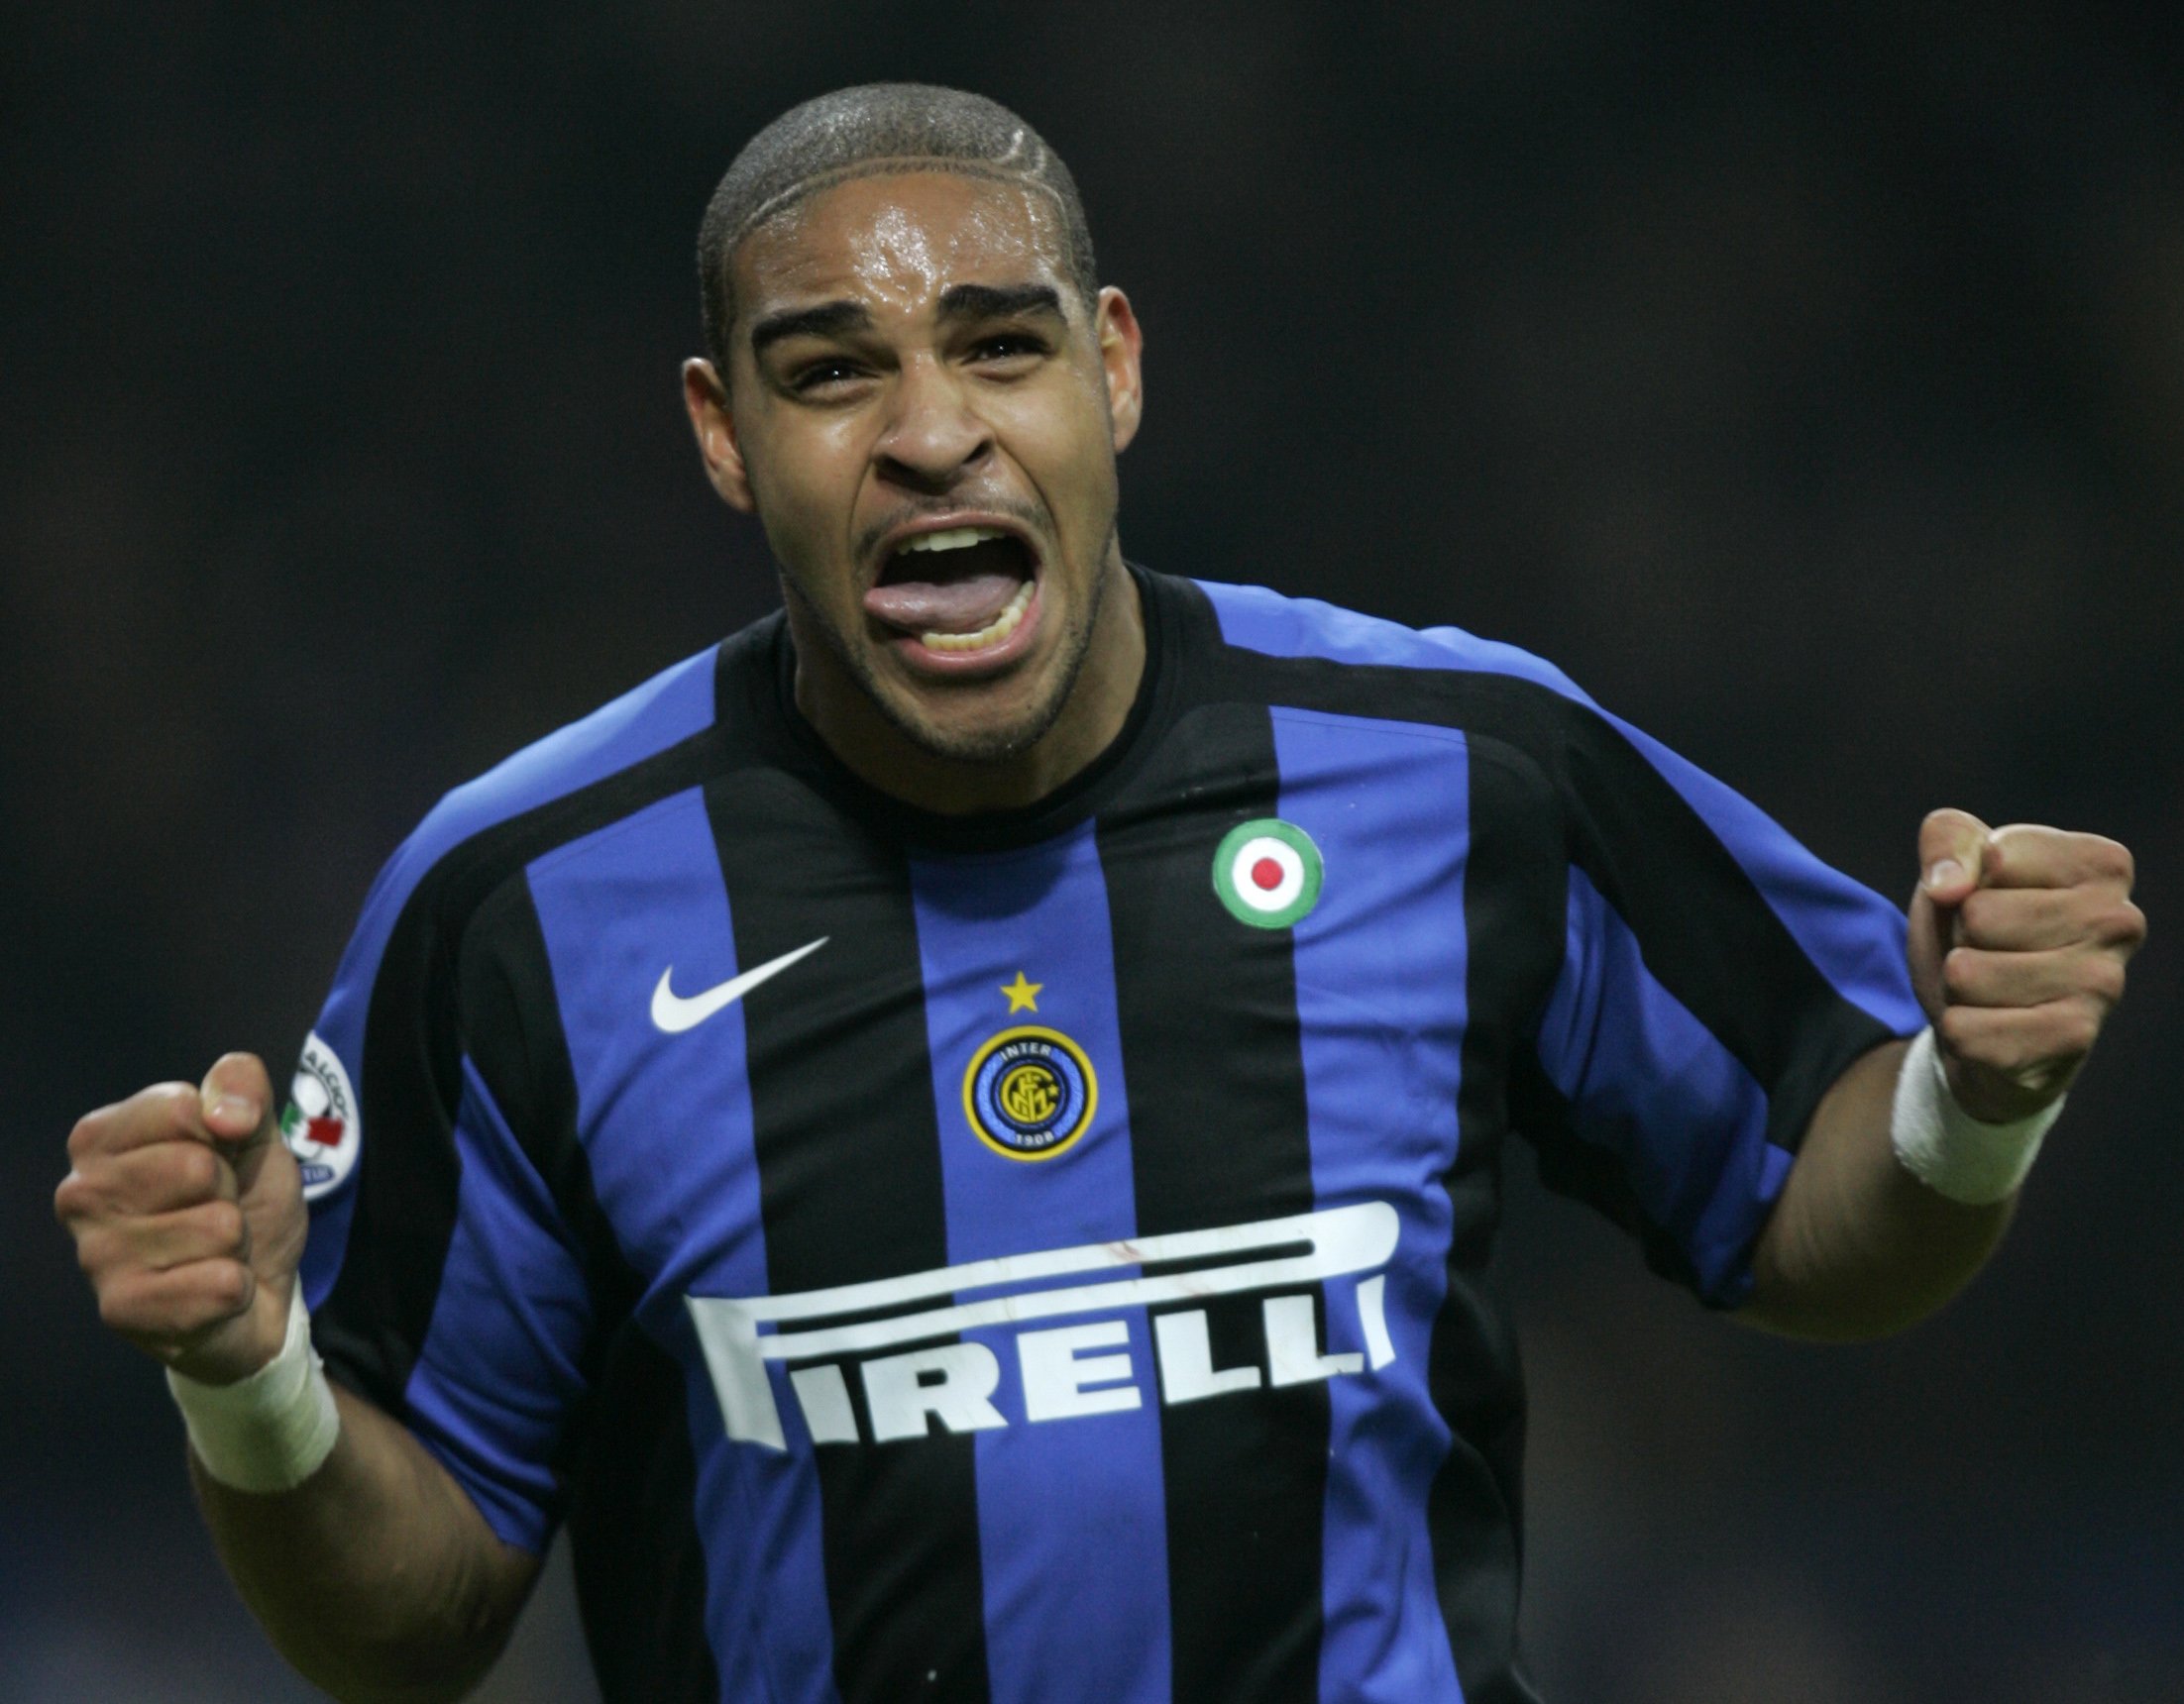 The former striker enjoyed great success during his time at Inter Milan